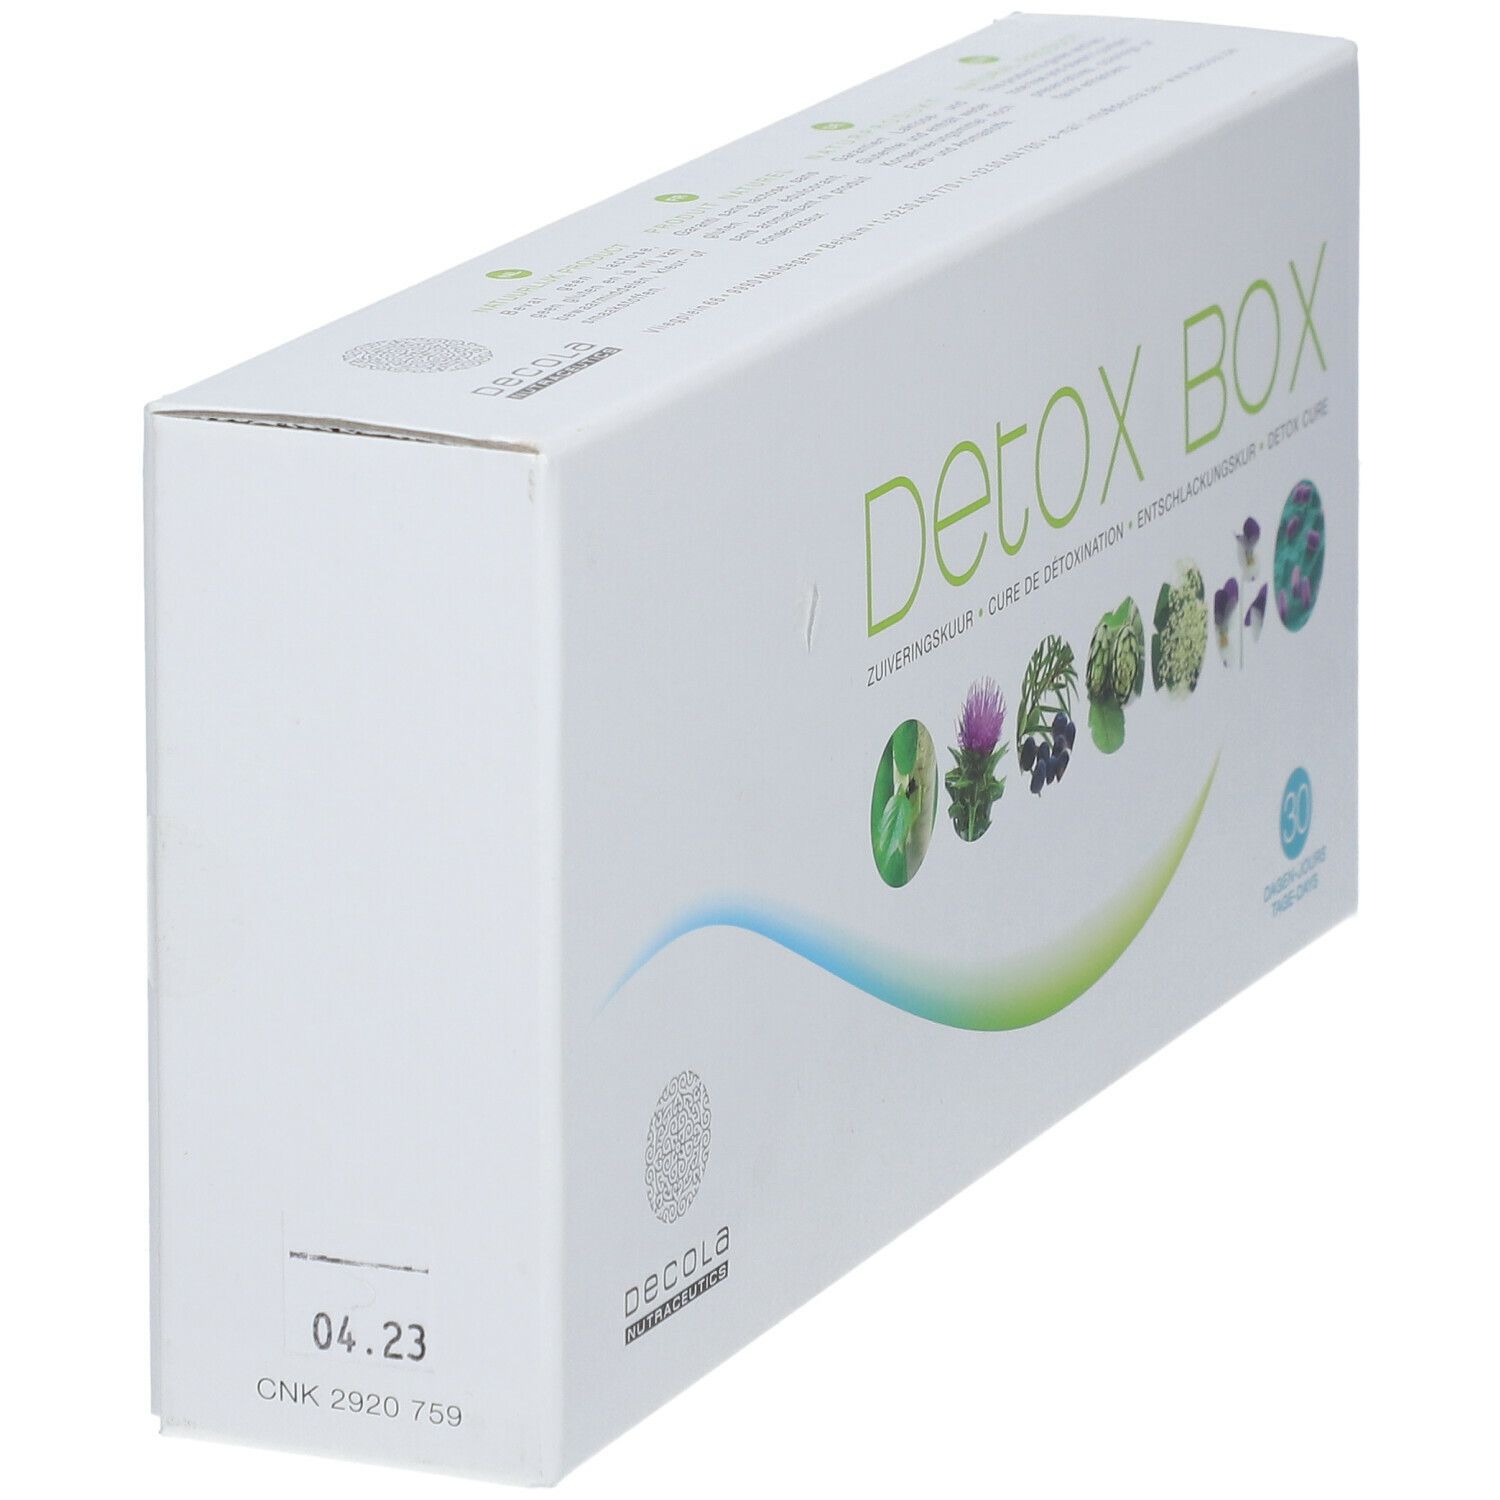 Decola Detox Box